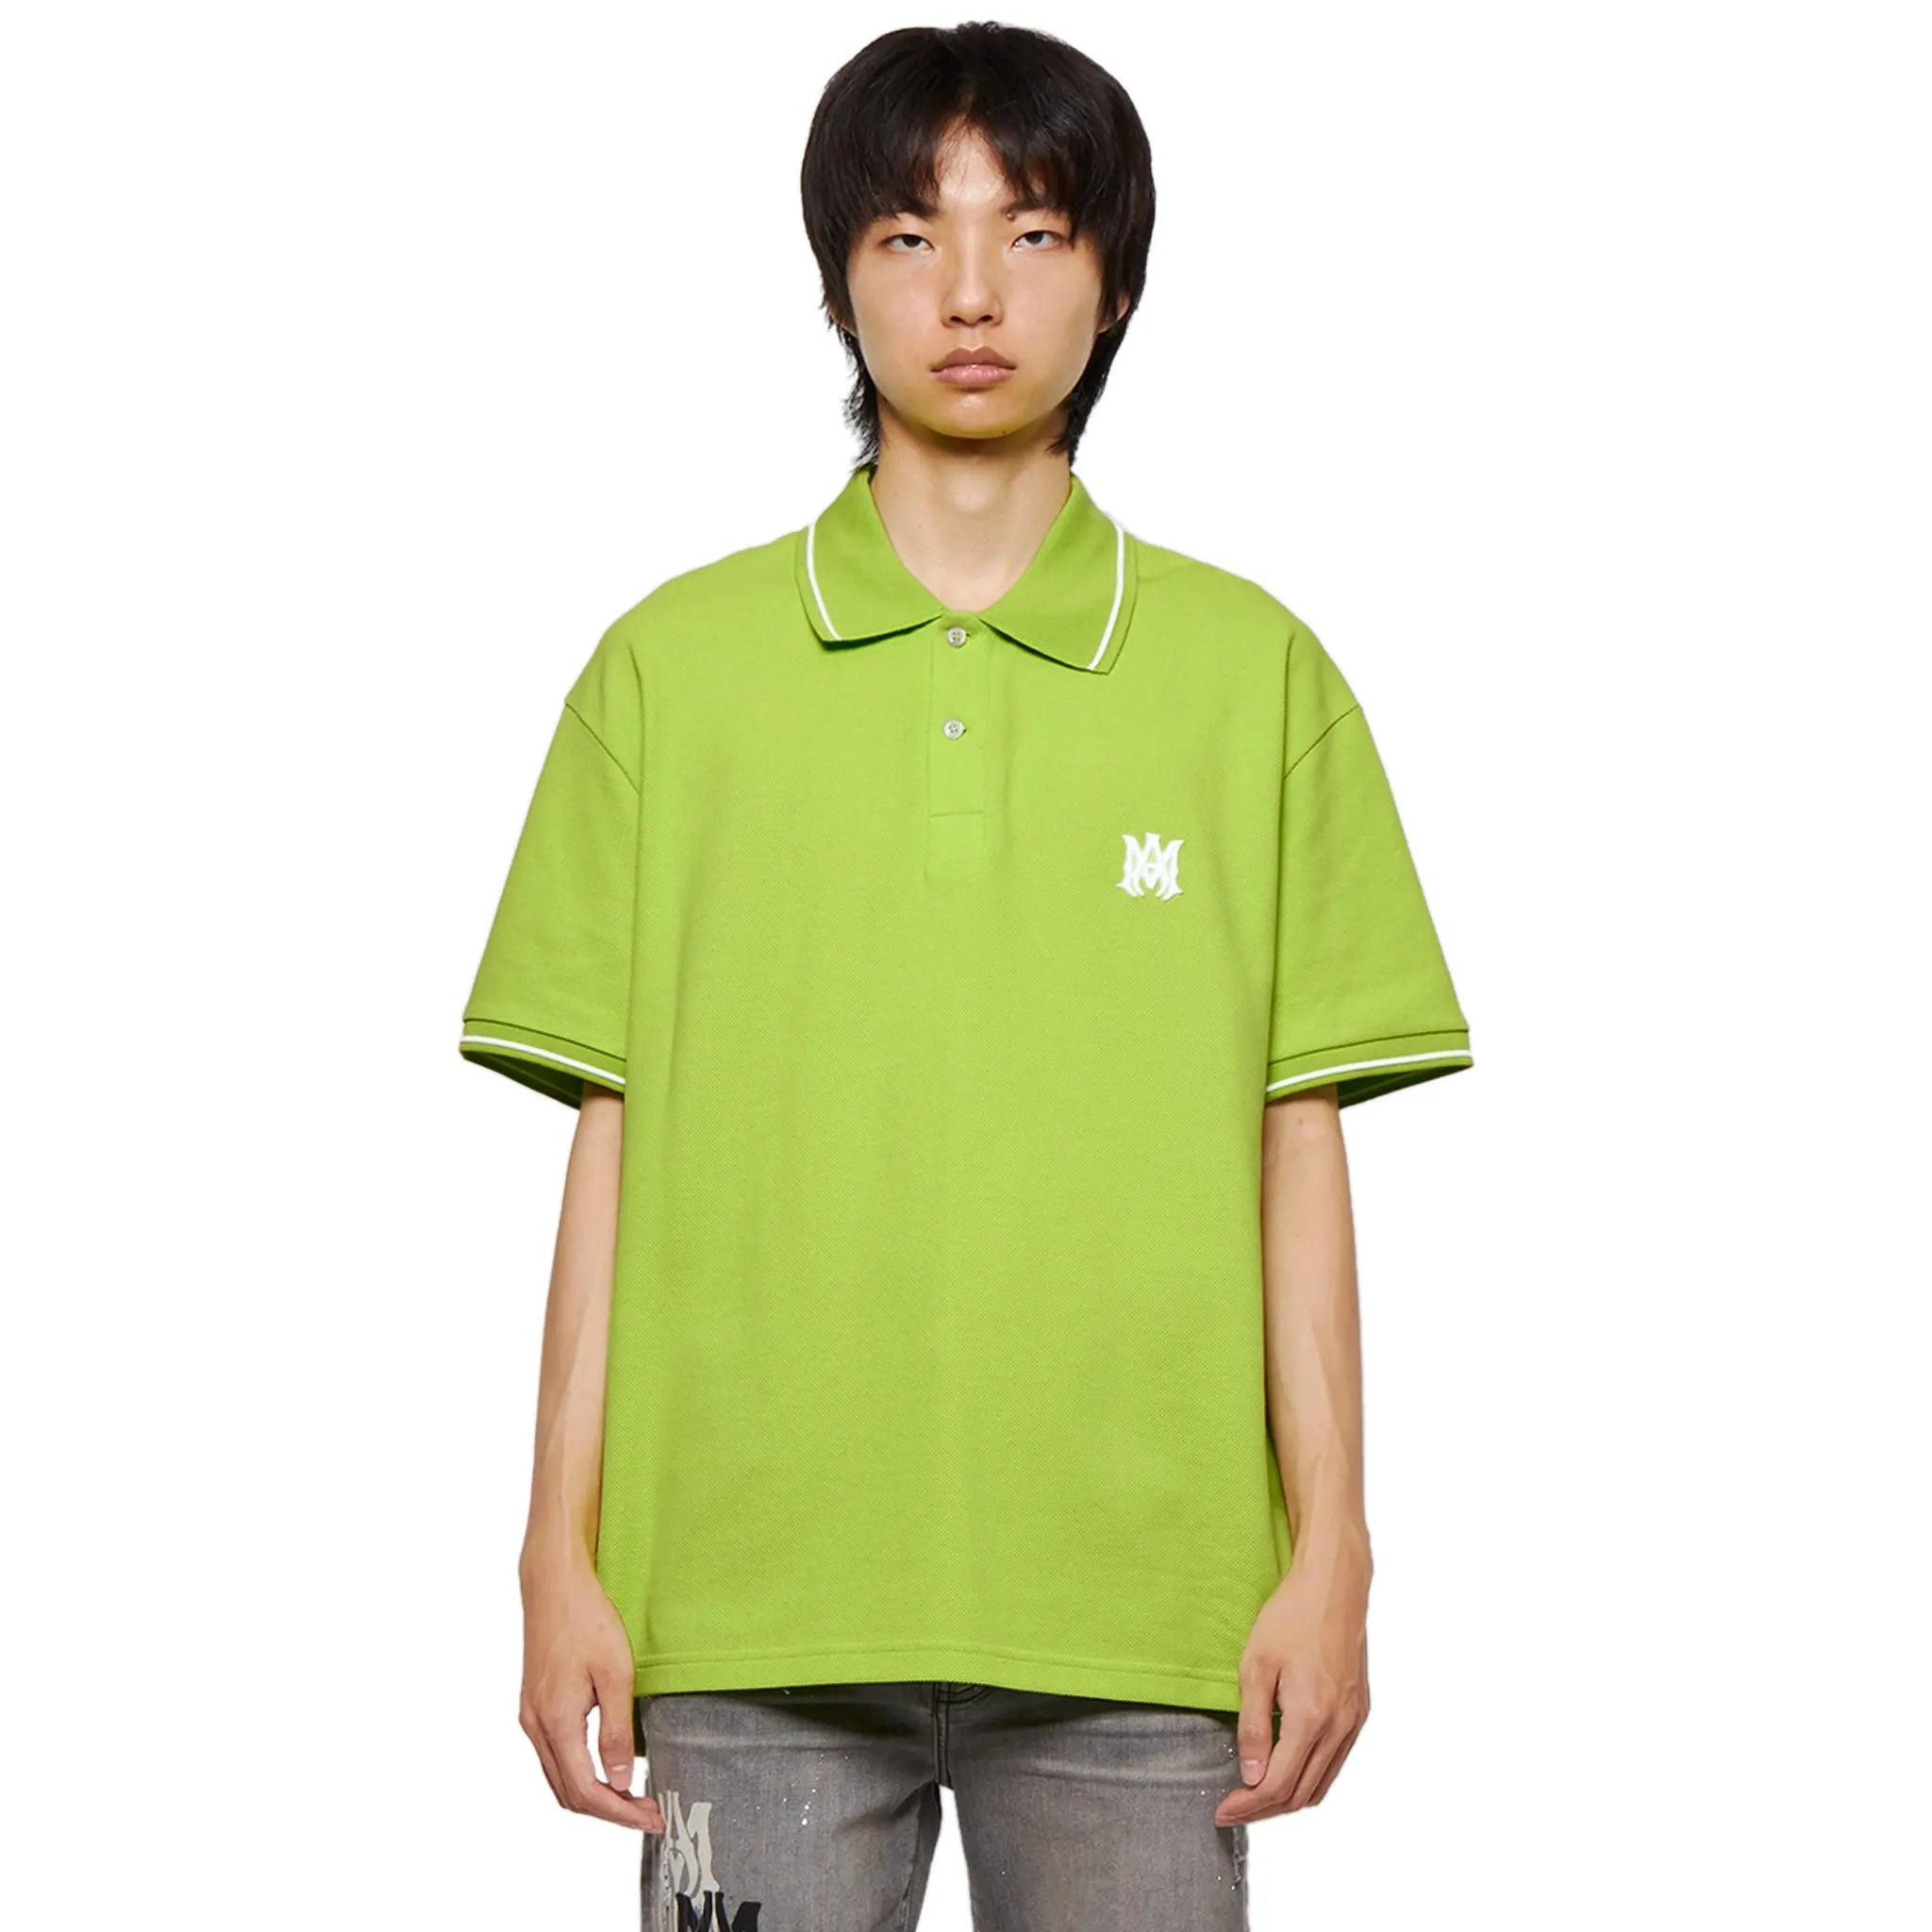 Detail view of Amiri Solid Short Sleeve Green Polo Shirt PF22MSS015-360